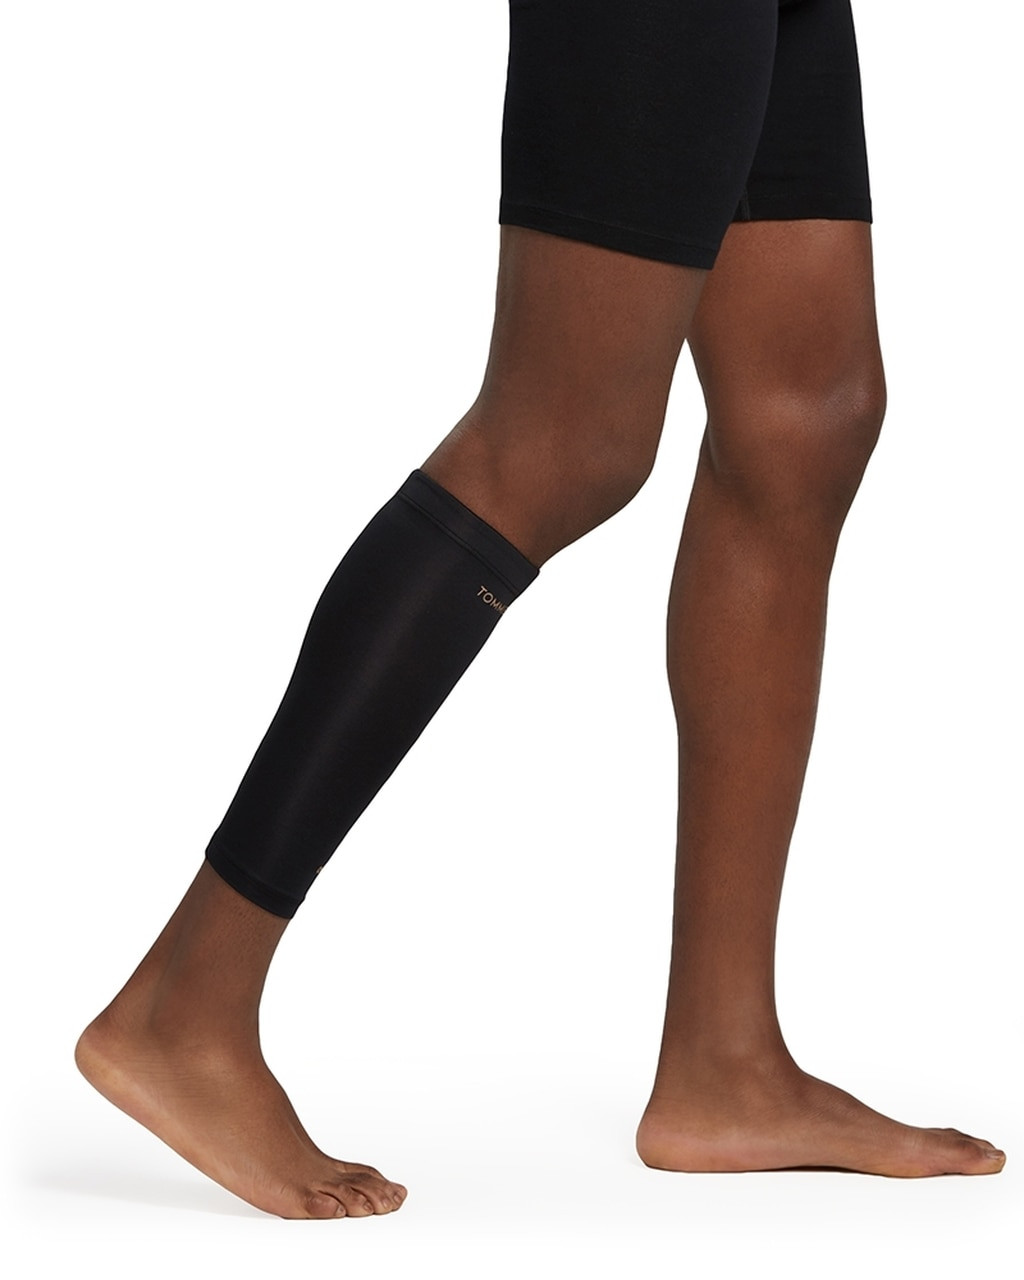 COPPER Compression Calf Sleeve Running Leg Support Brace Sport Shin Splint  Socks